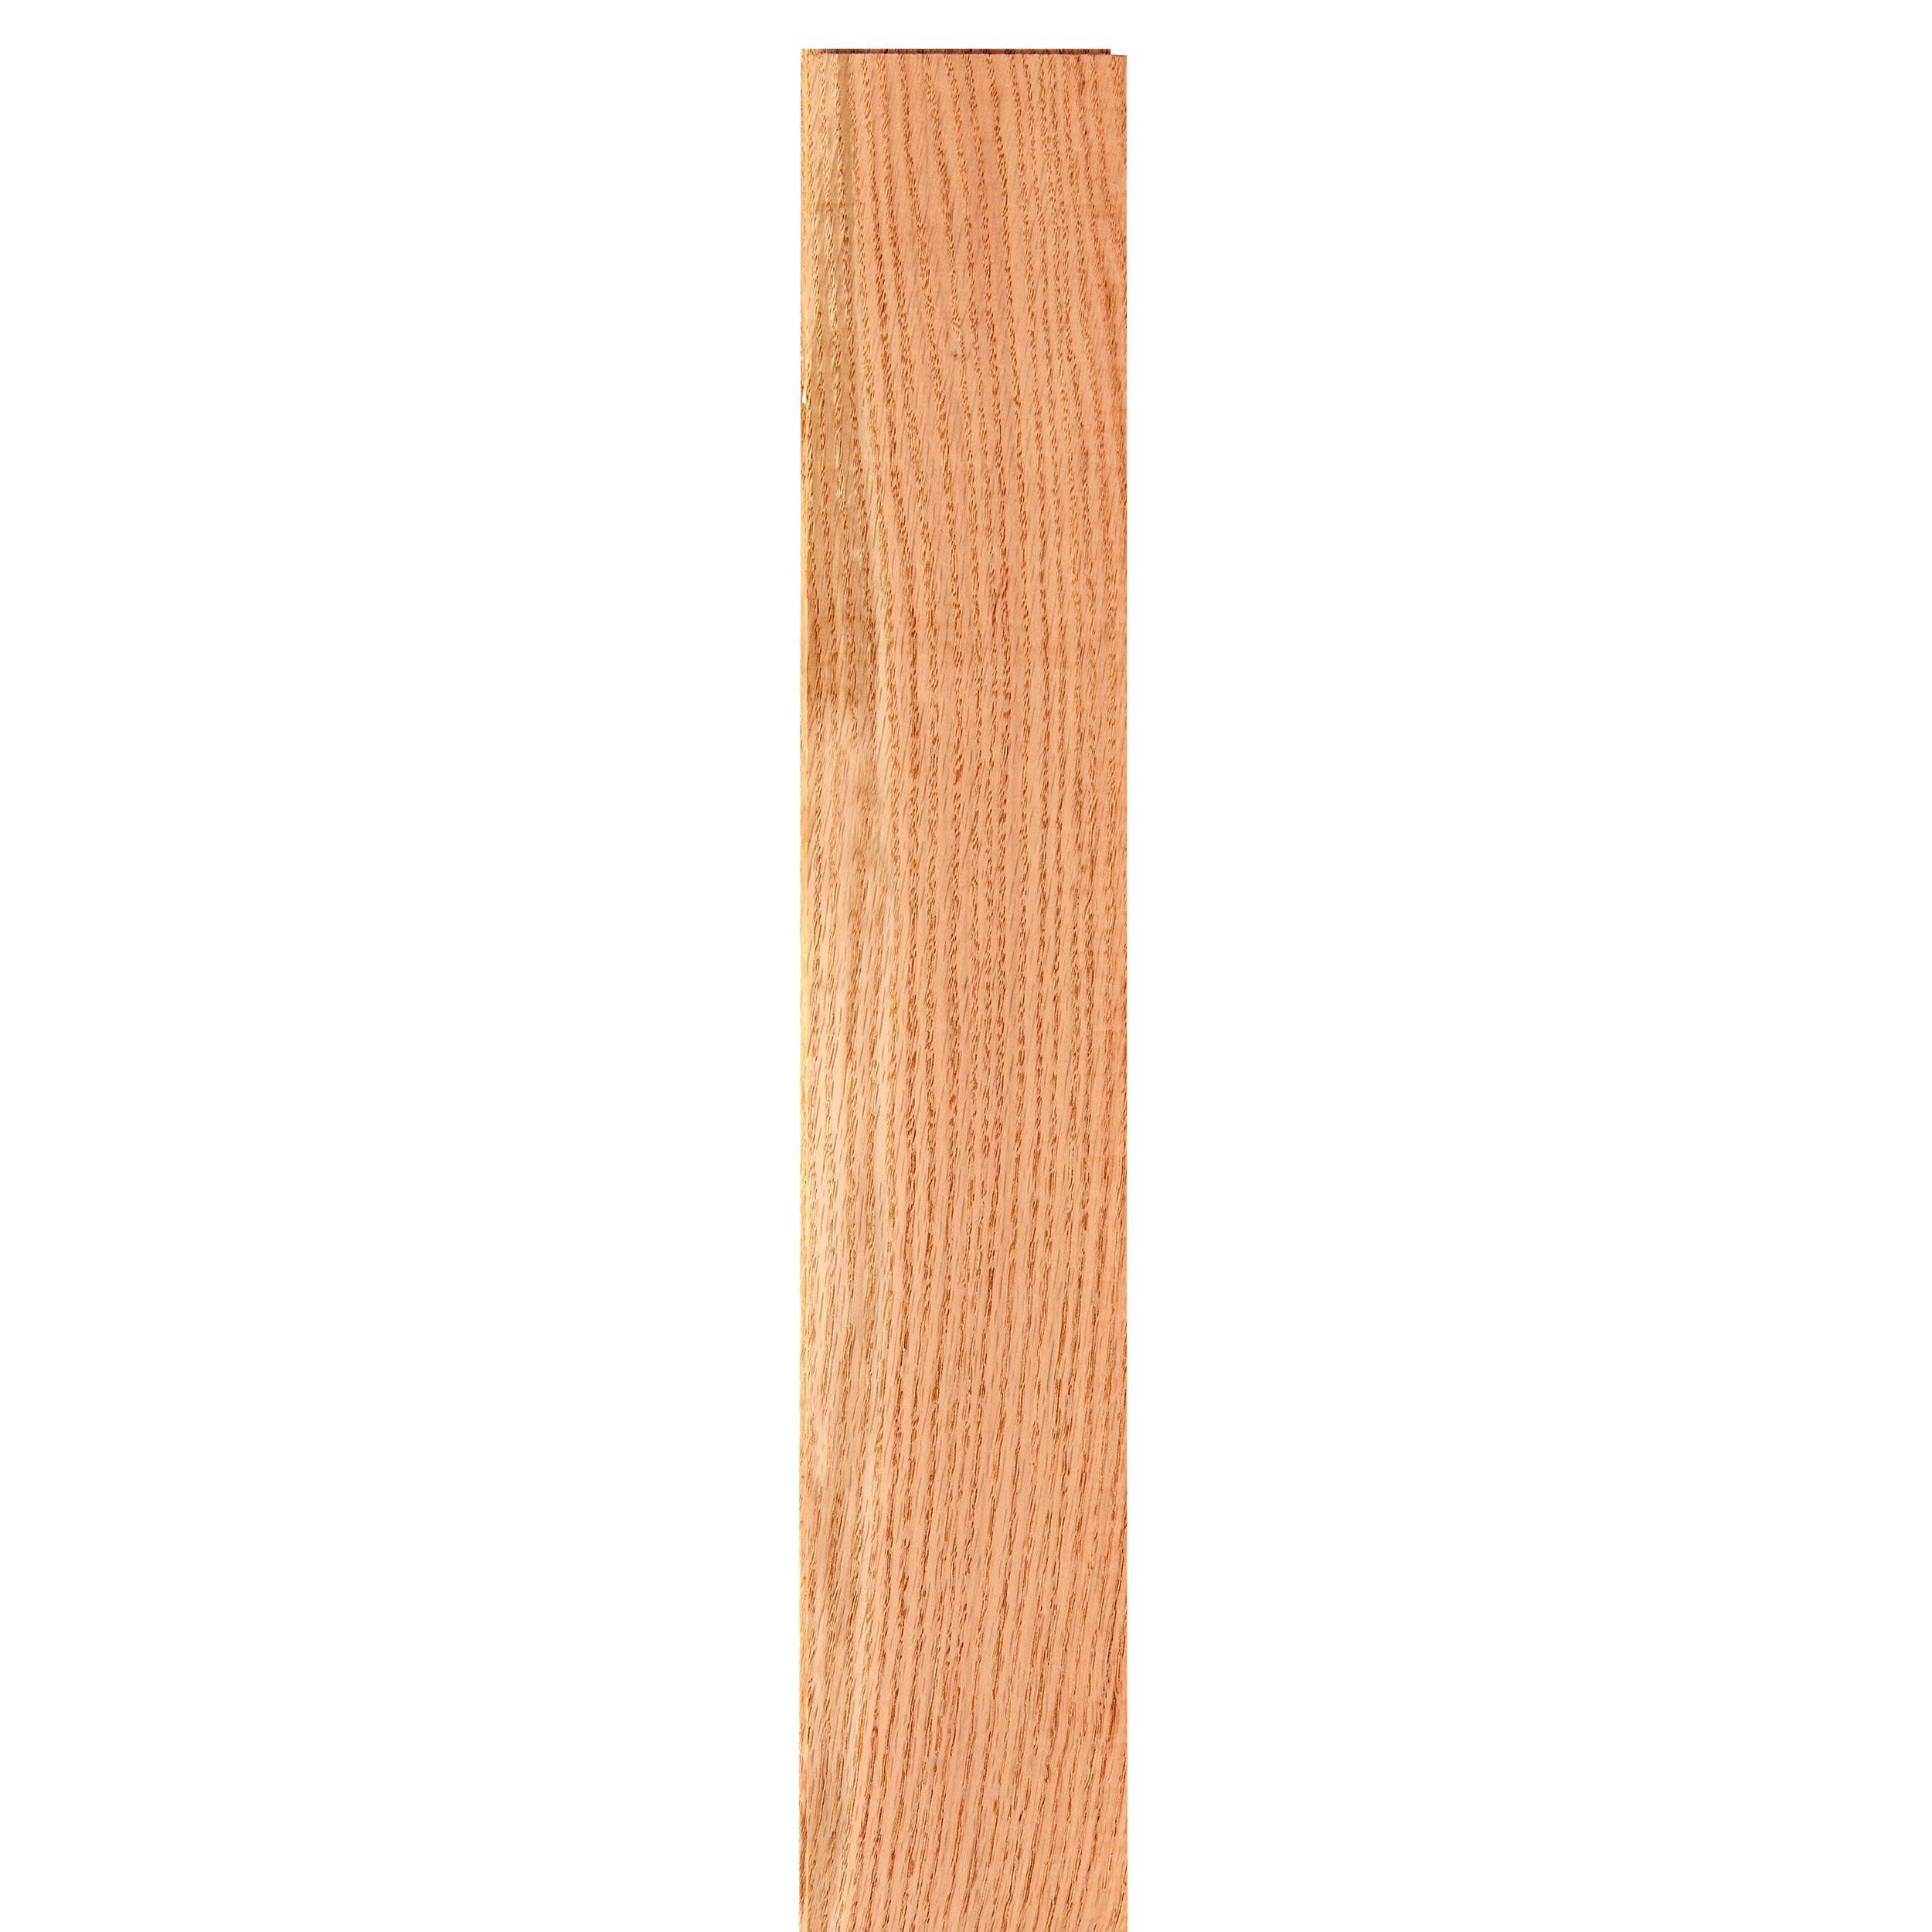 Unfinished Red Oak Solid Hardwood 1 Common Grade